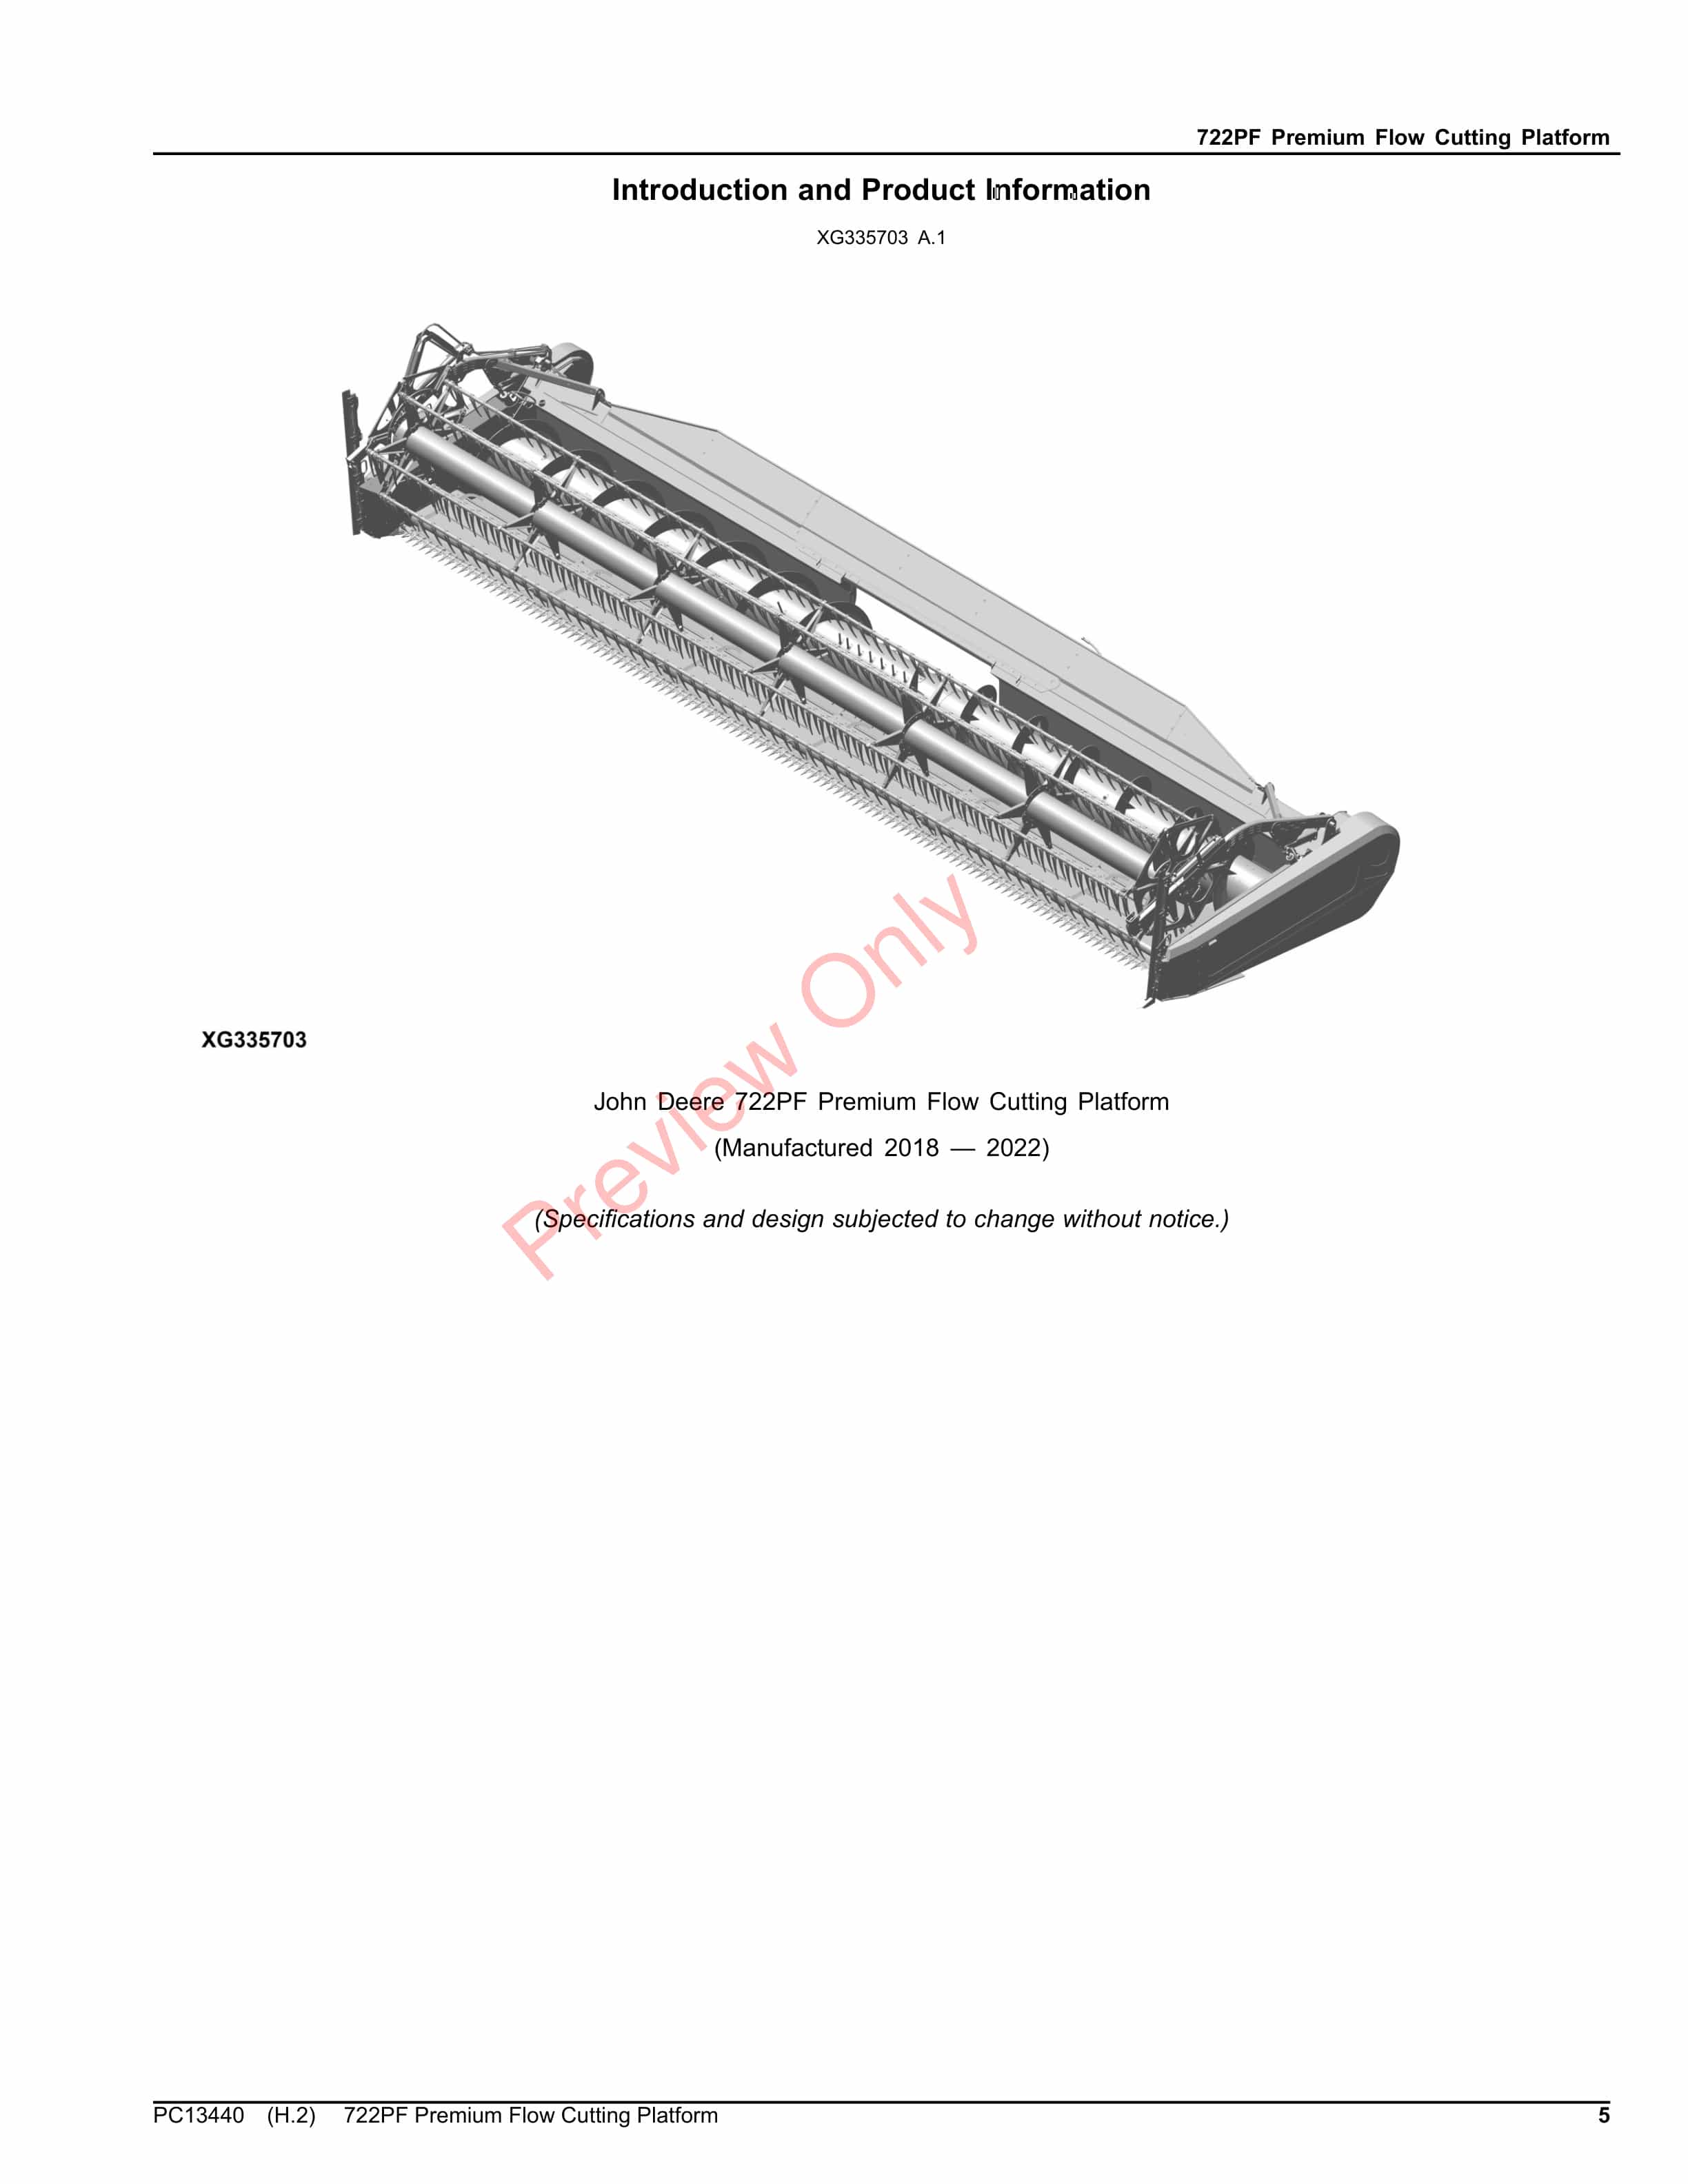 John Deere 722PF Premium Flow Cutting Platform Parts Catalog PC13440 06JUL22-5